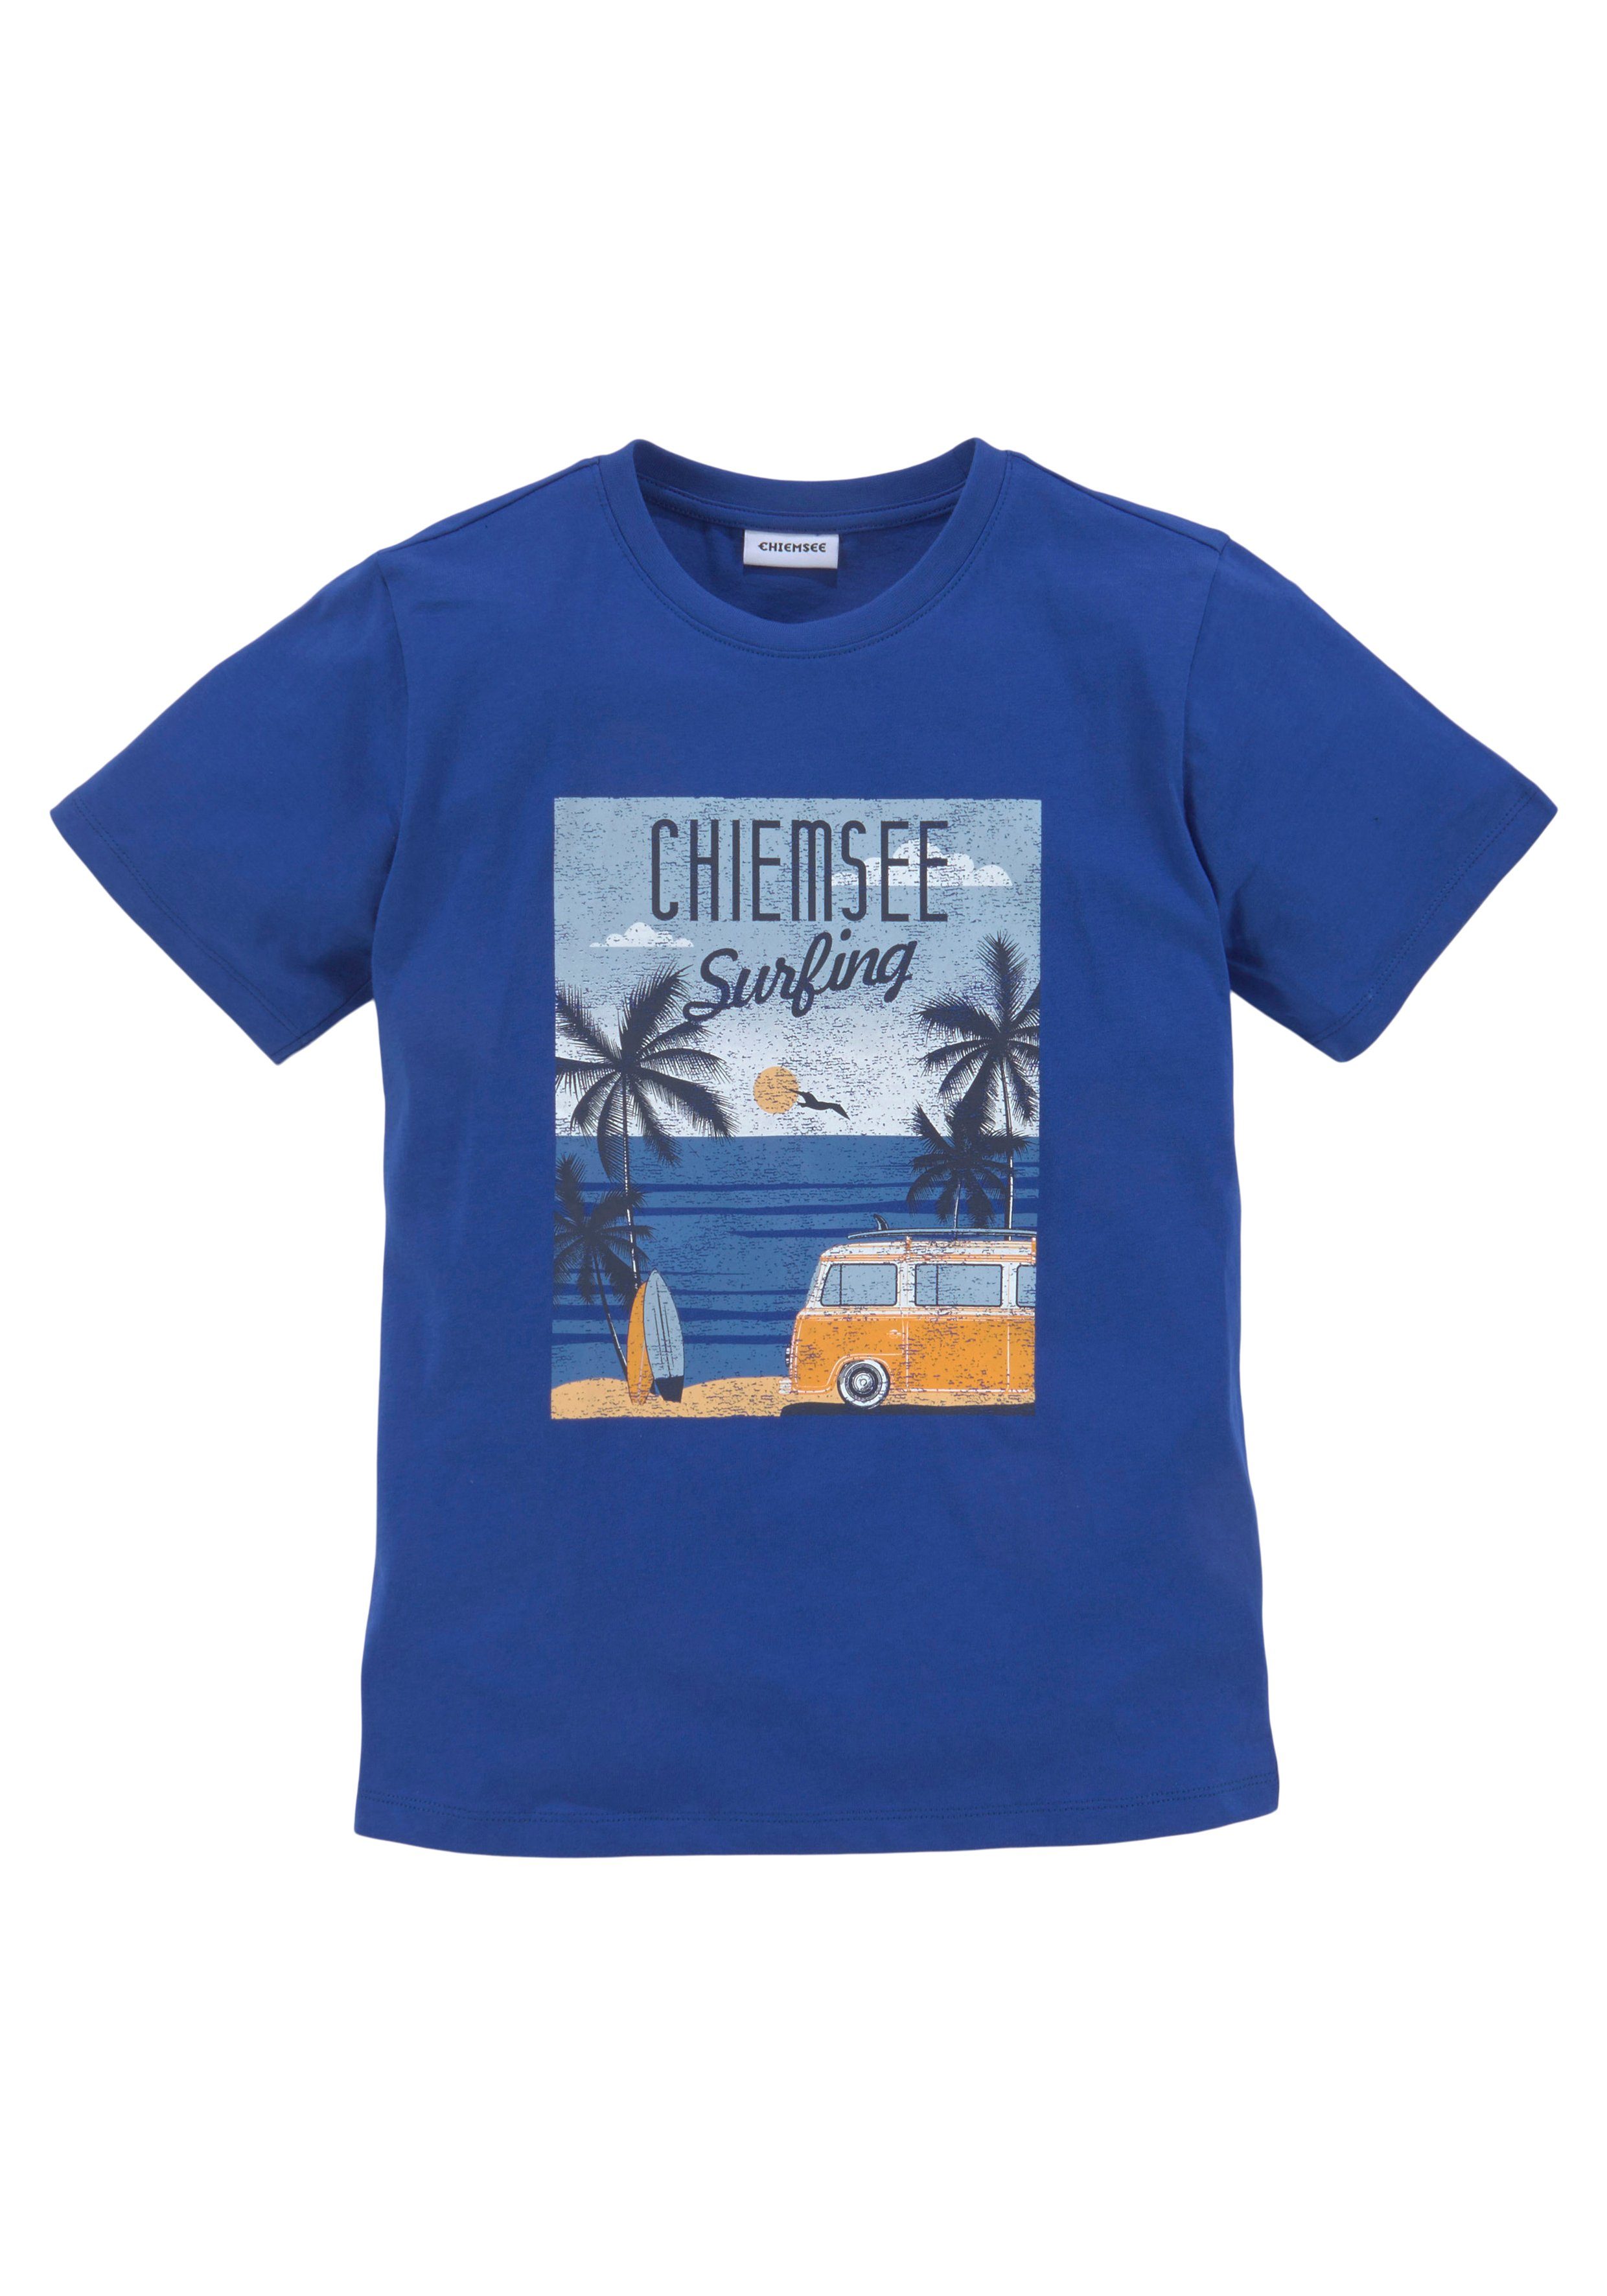 Chiemsee Surfing T-Shirt